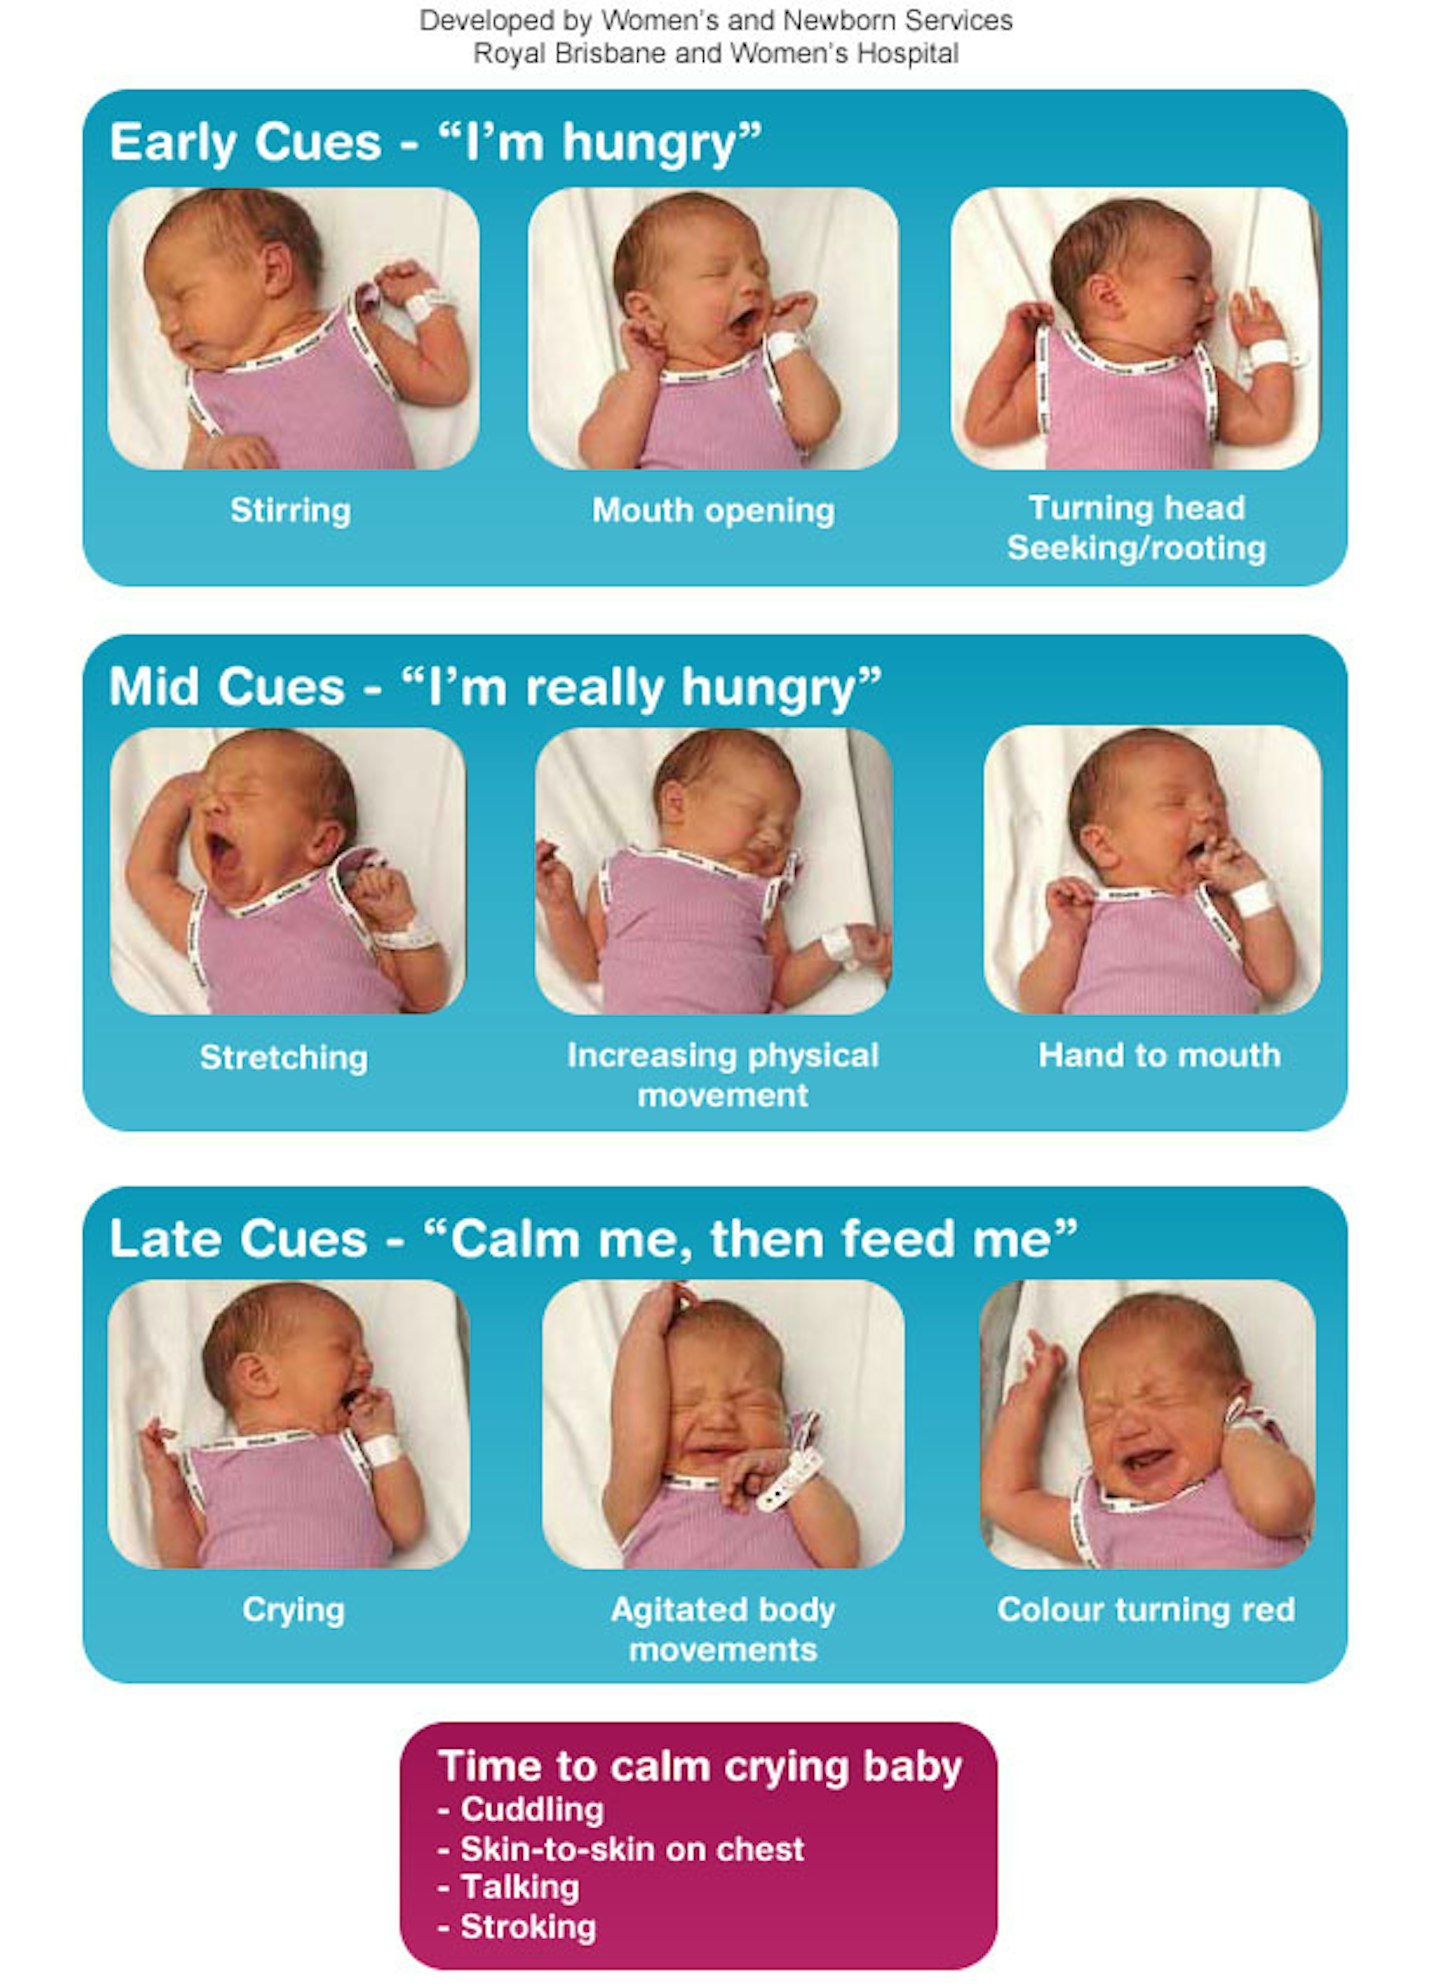 https://images.bauerhosting.com/affiliates/sites/12/motherandbaby/2021/09/baby-feeding-cues.jpg?auto=format&w=1440&q=80